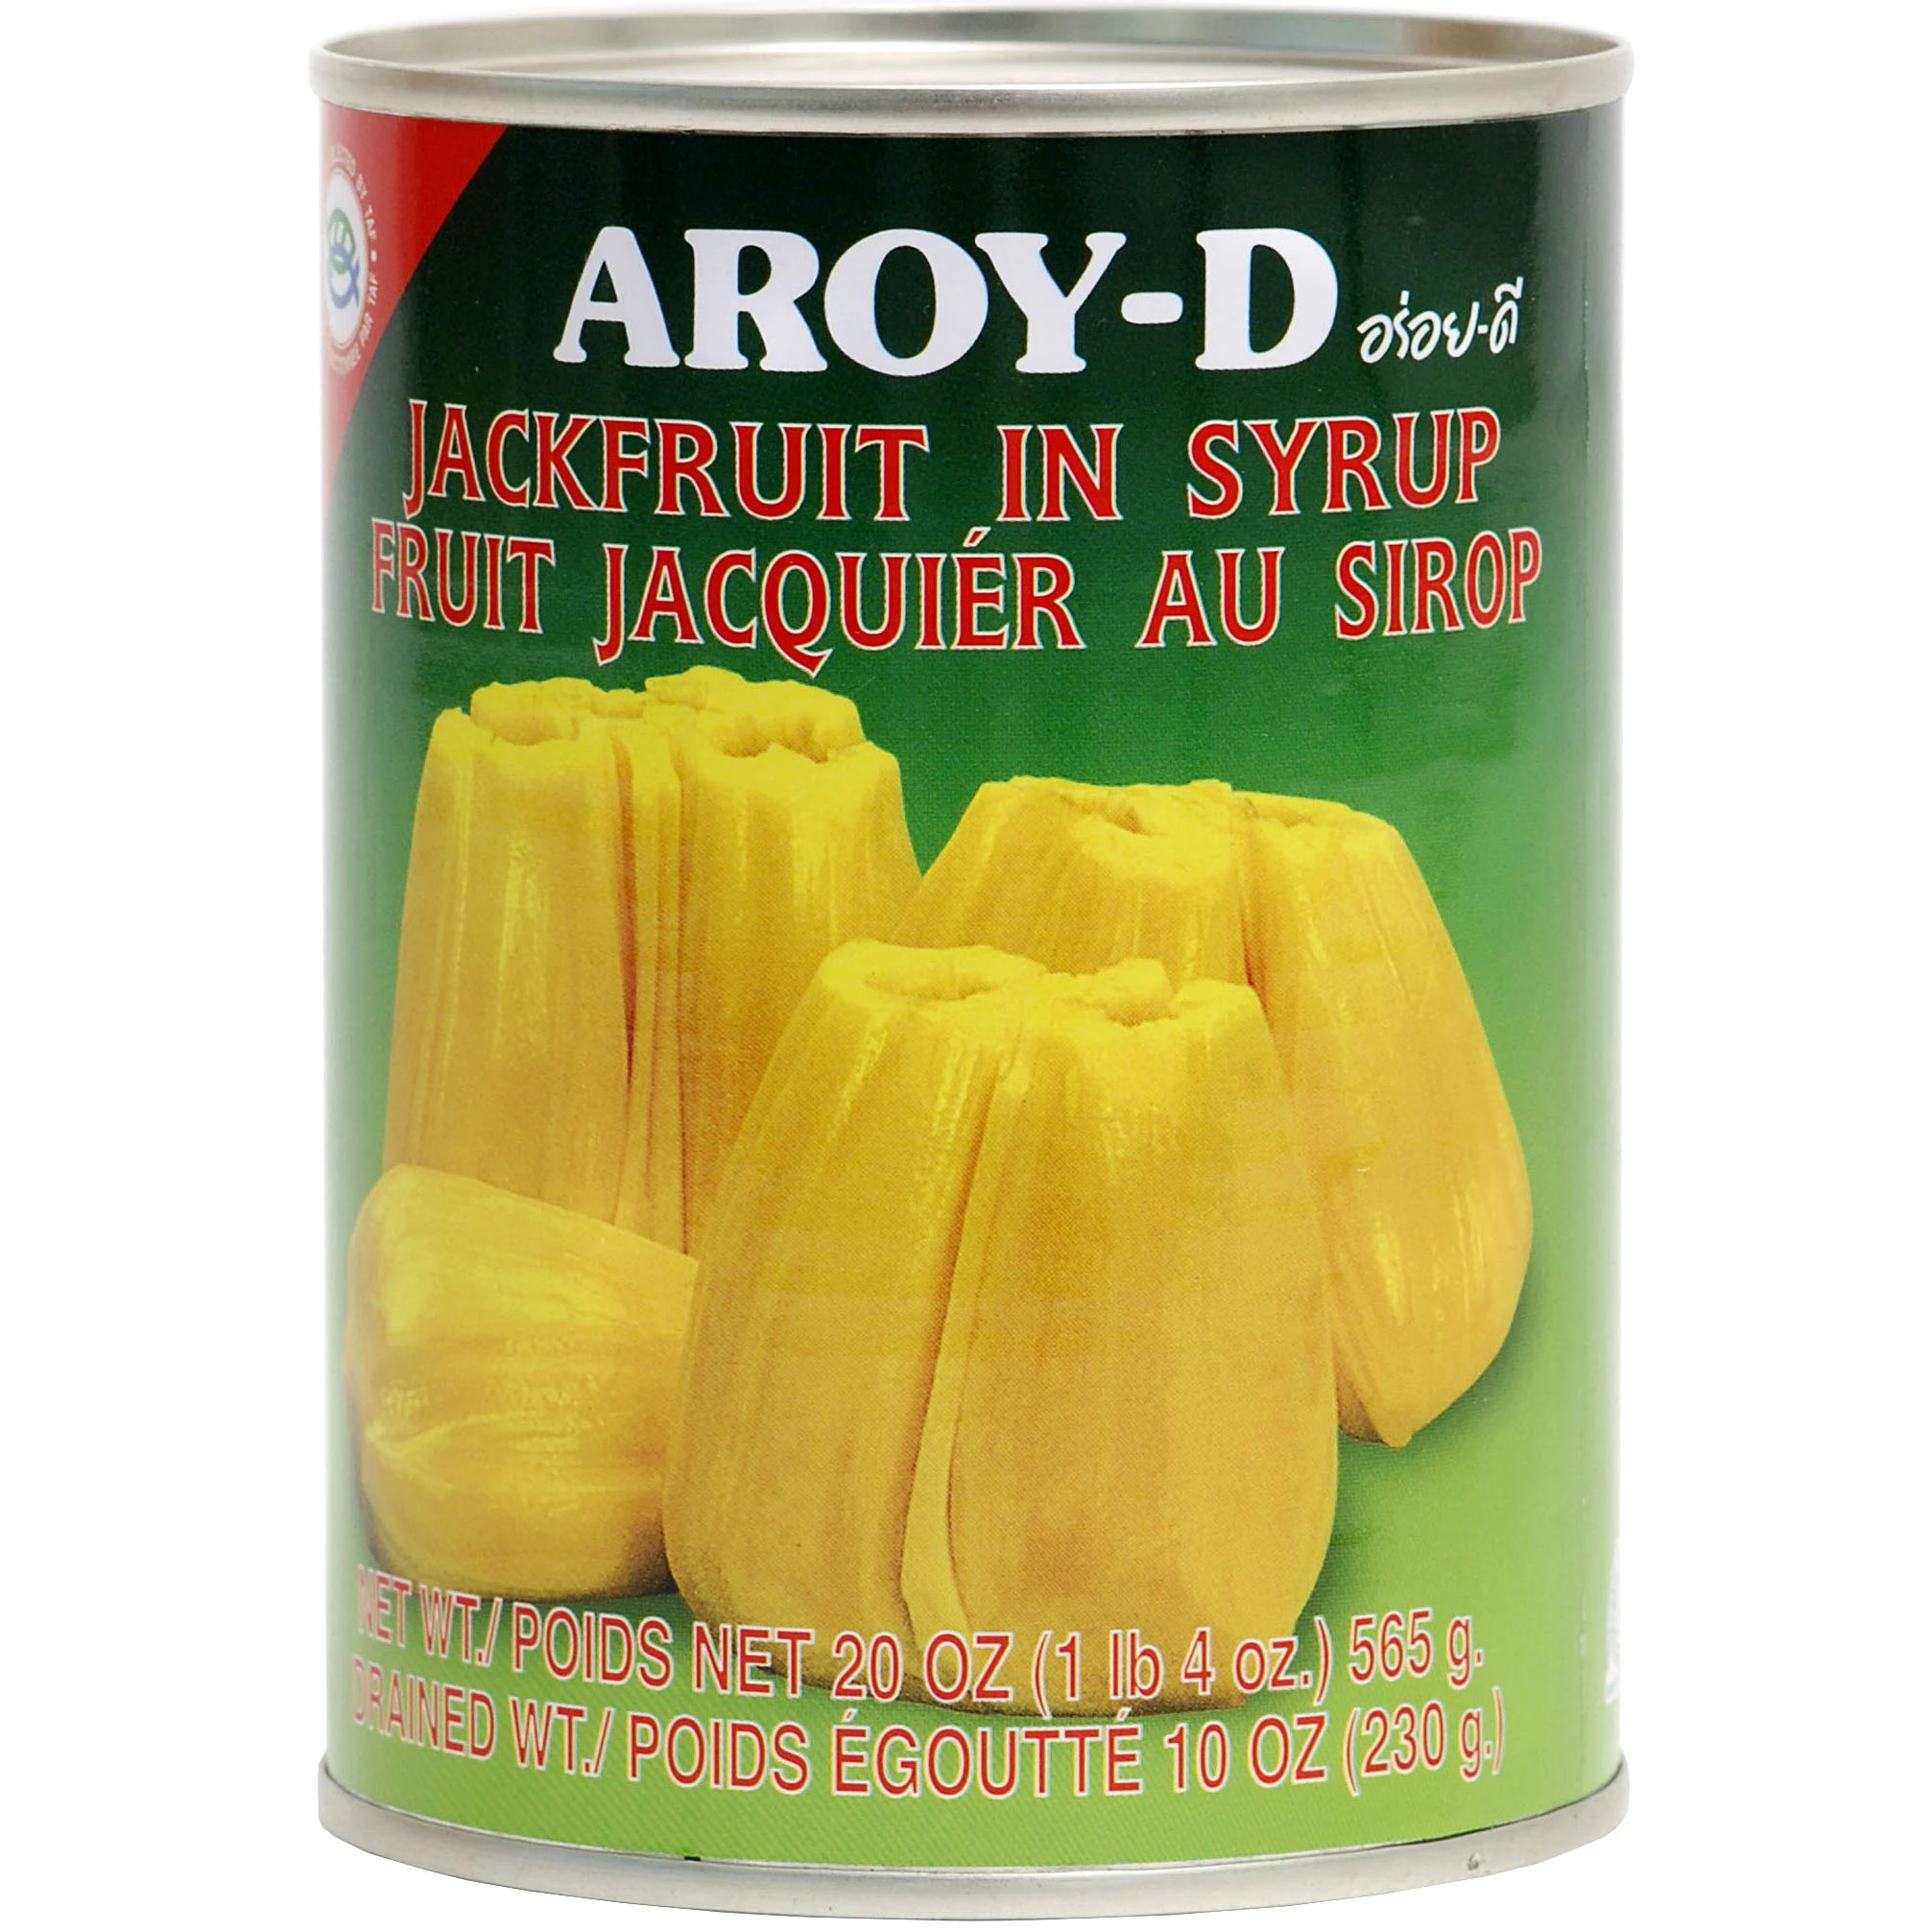 جاكفروت في شراب 24 × 565 جرام - Aroy-d